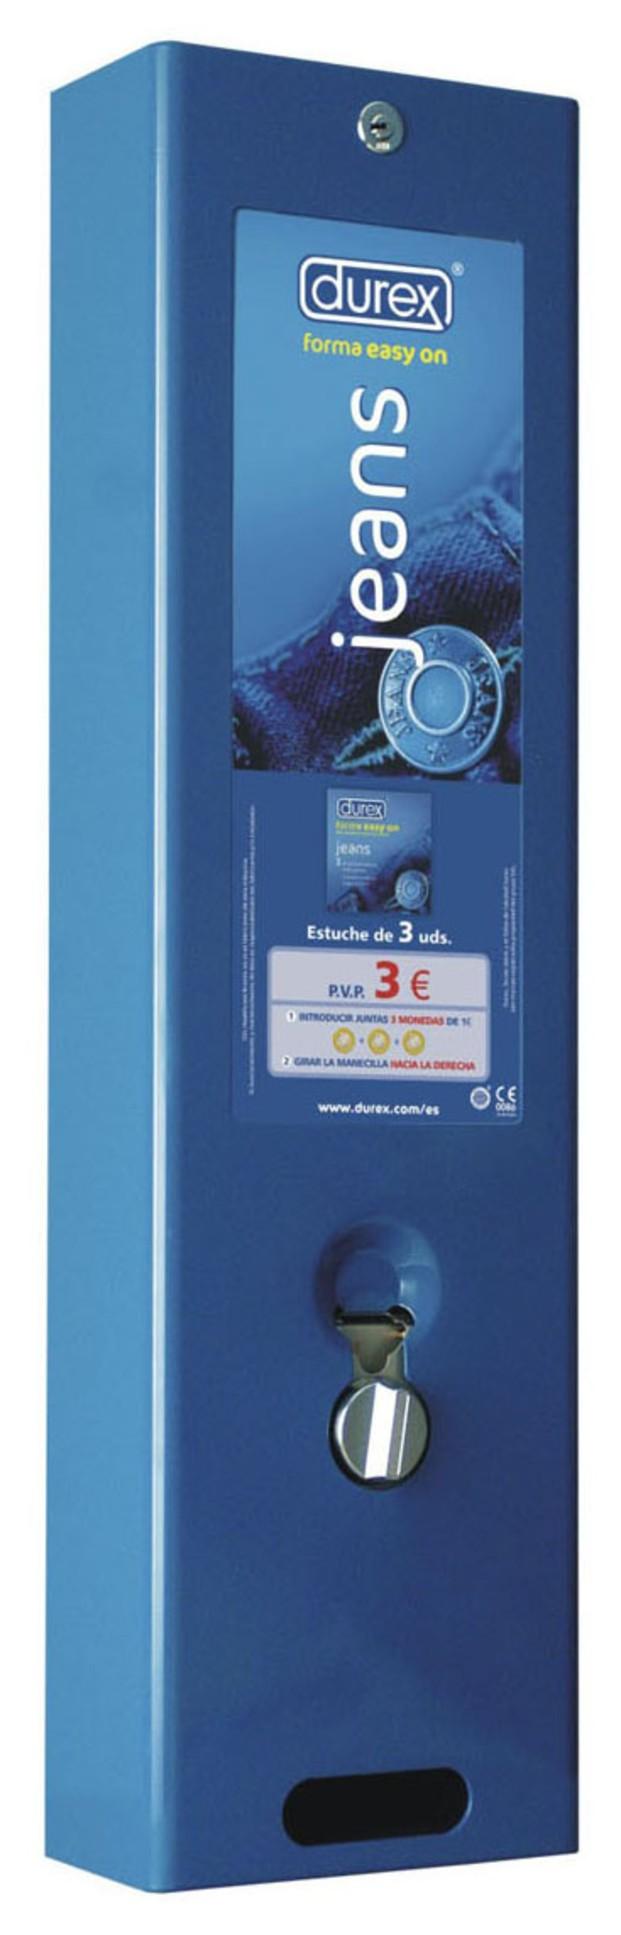 Máquina preservativo. Máquina de preservativos Durex